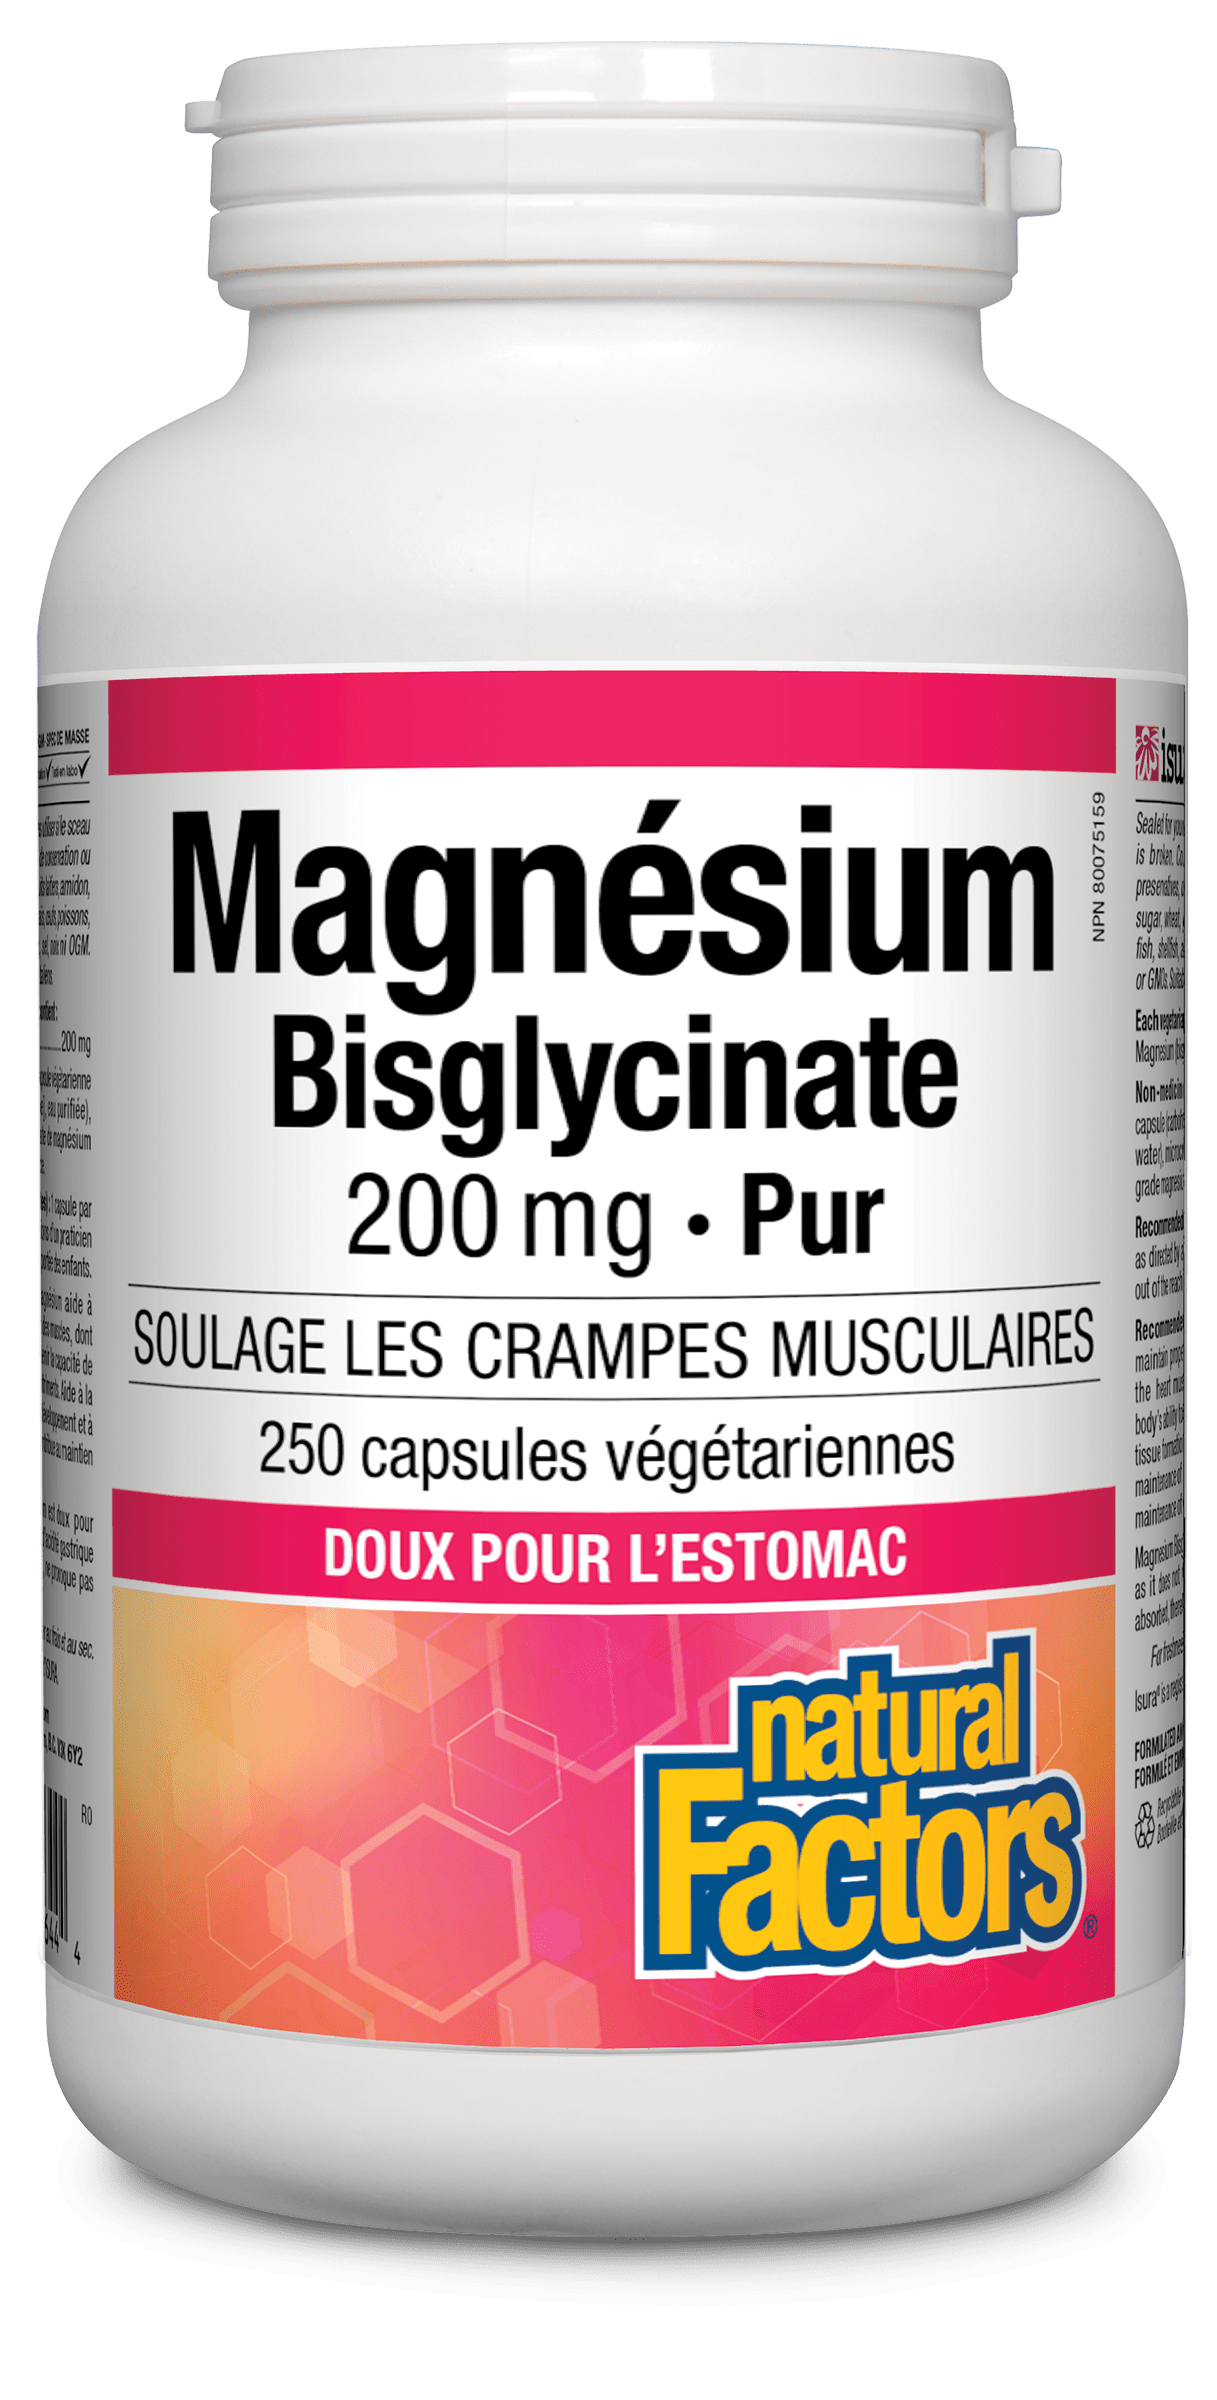 NATURAL FACTORS Suppléments Magnésium bisglycinate (200 mg) 250vcaps